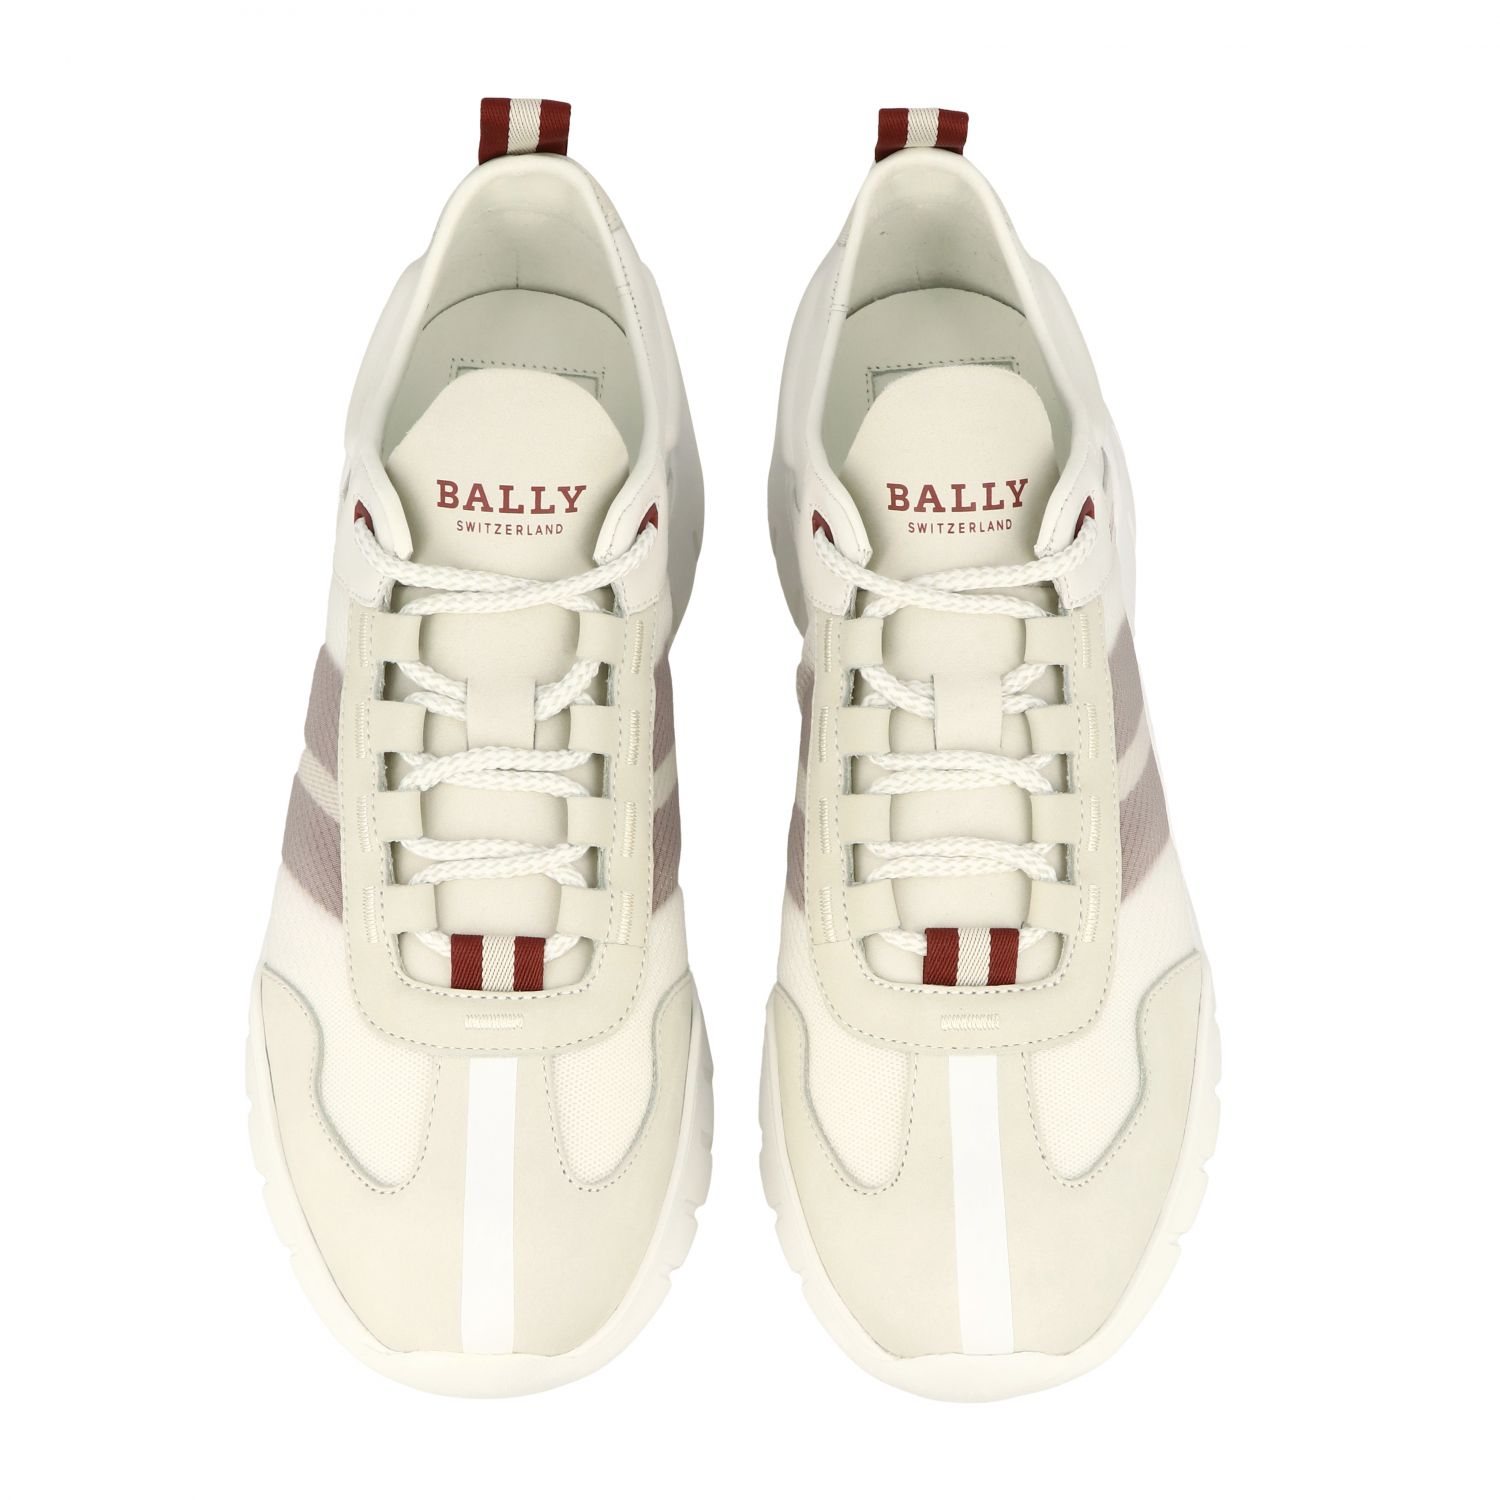 bally tennis shoes